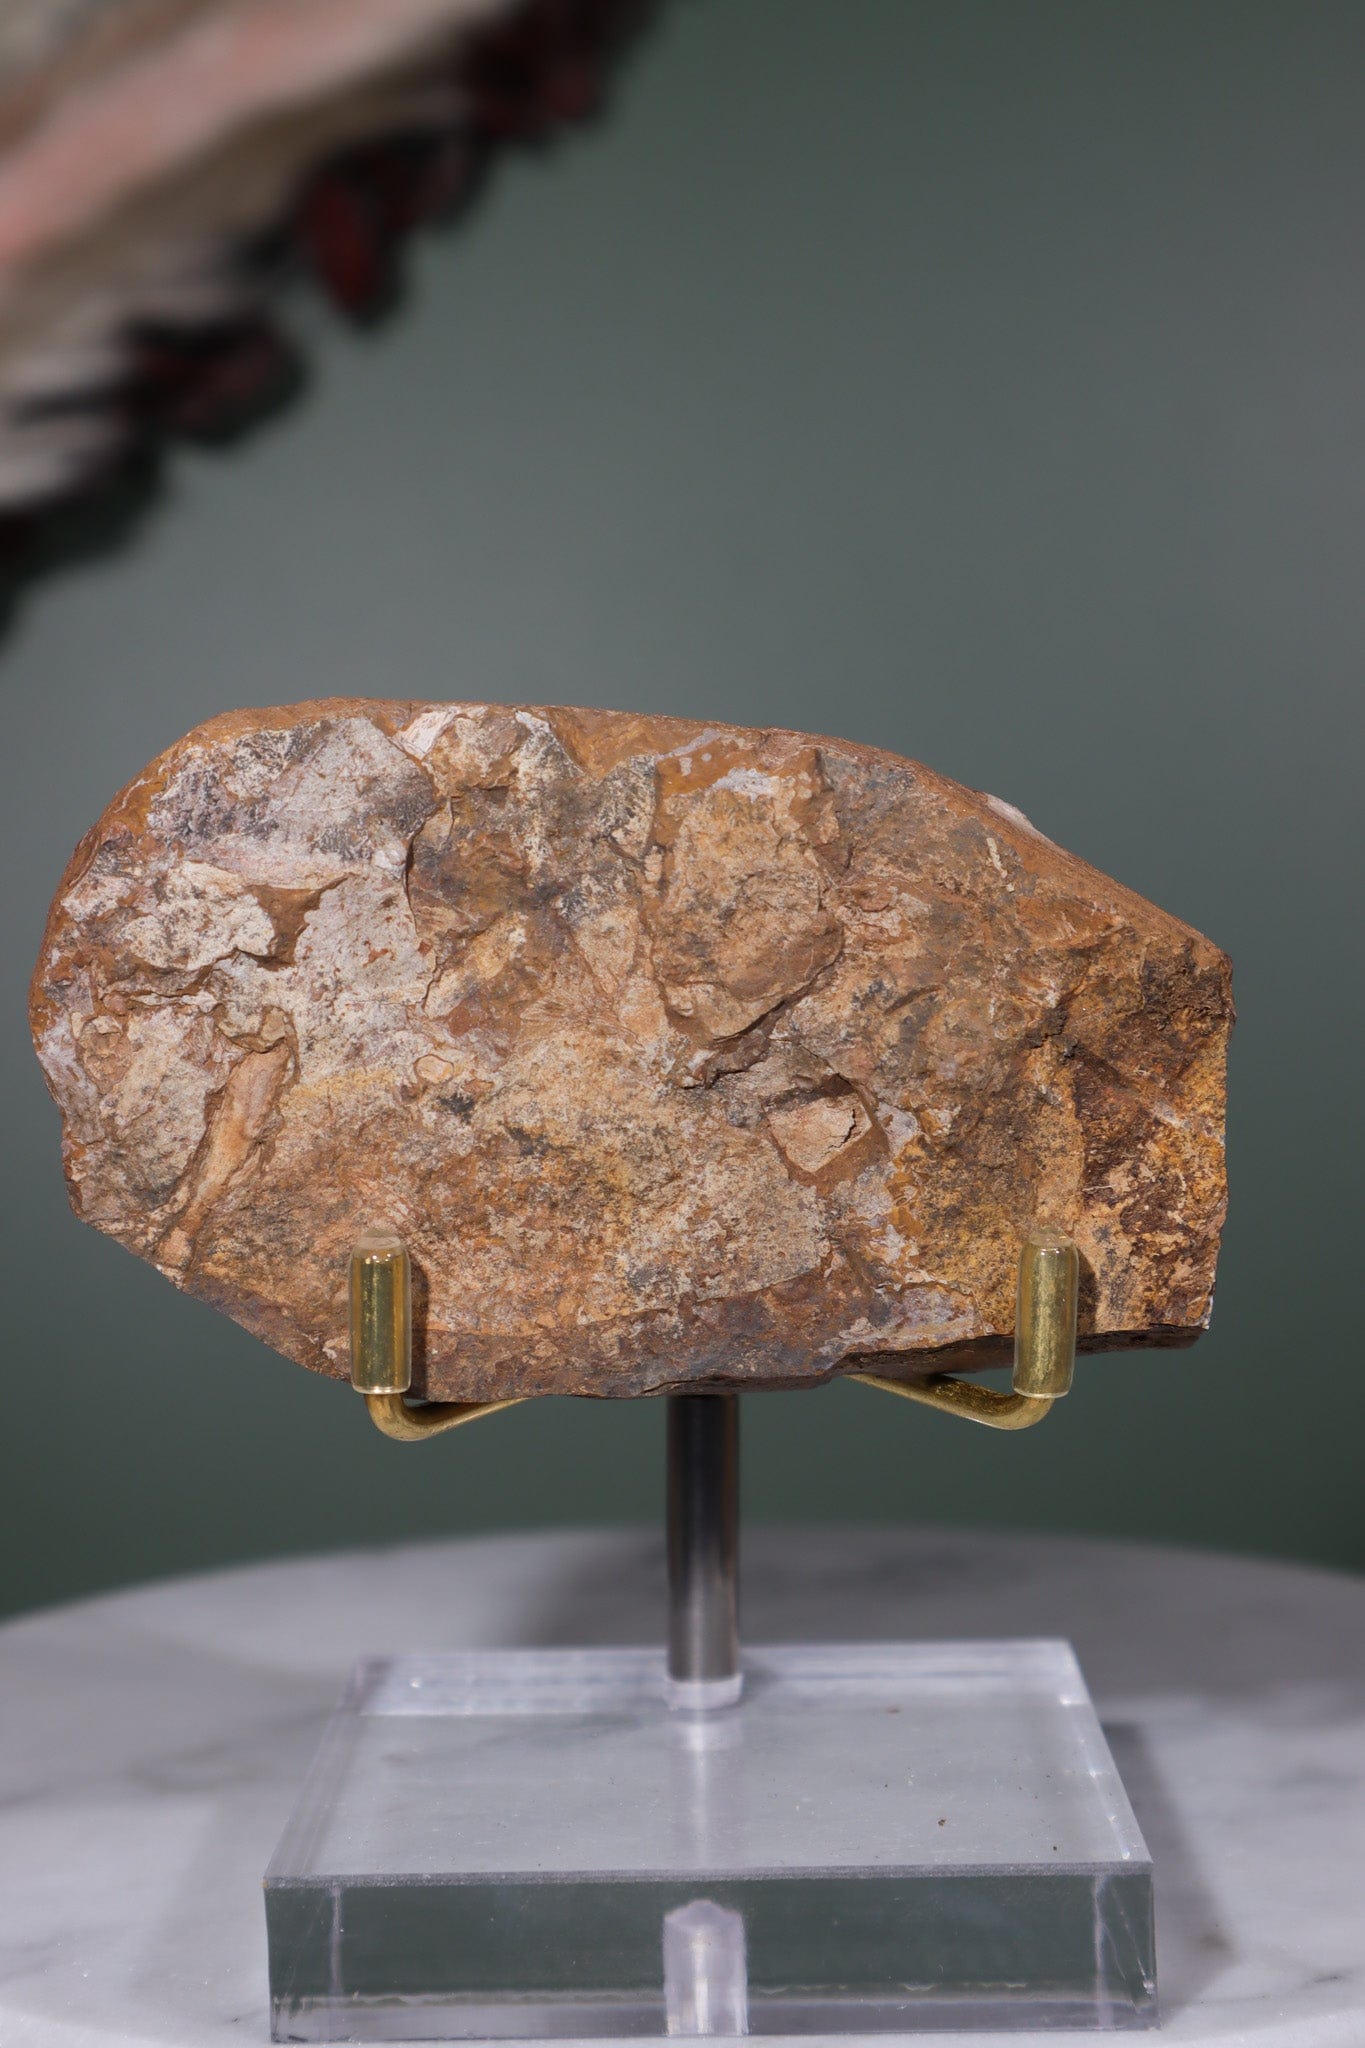 Ginkgo Leaf Fossil 8.5x5cm Fossil Tali & Loz Crystals